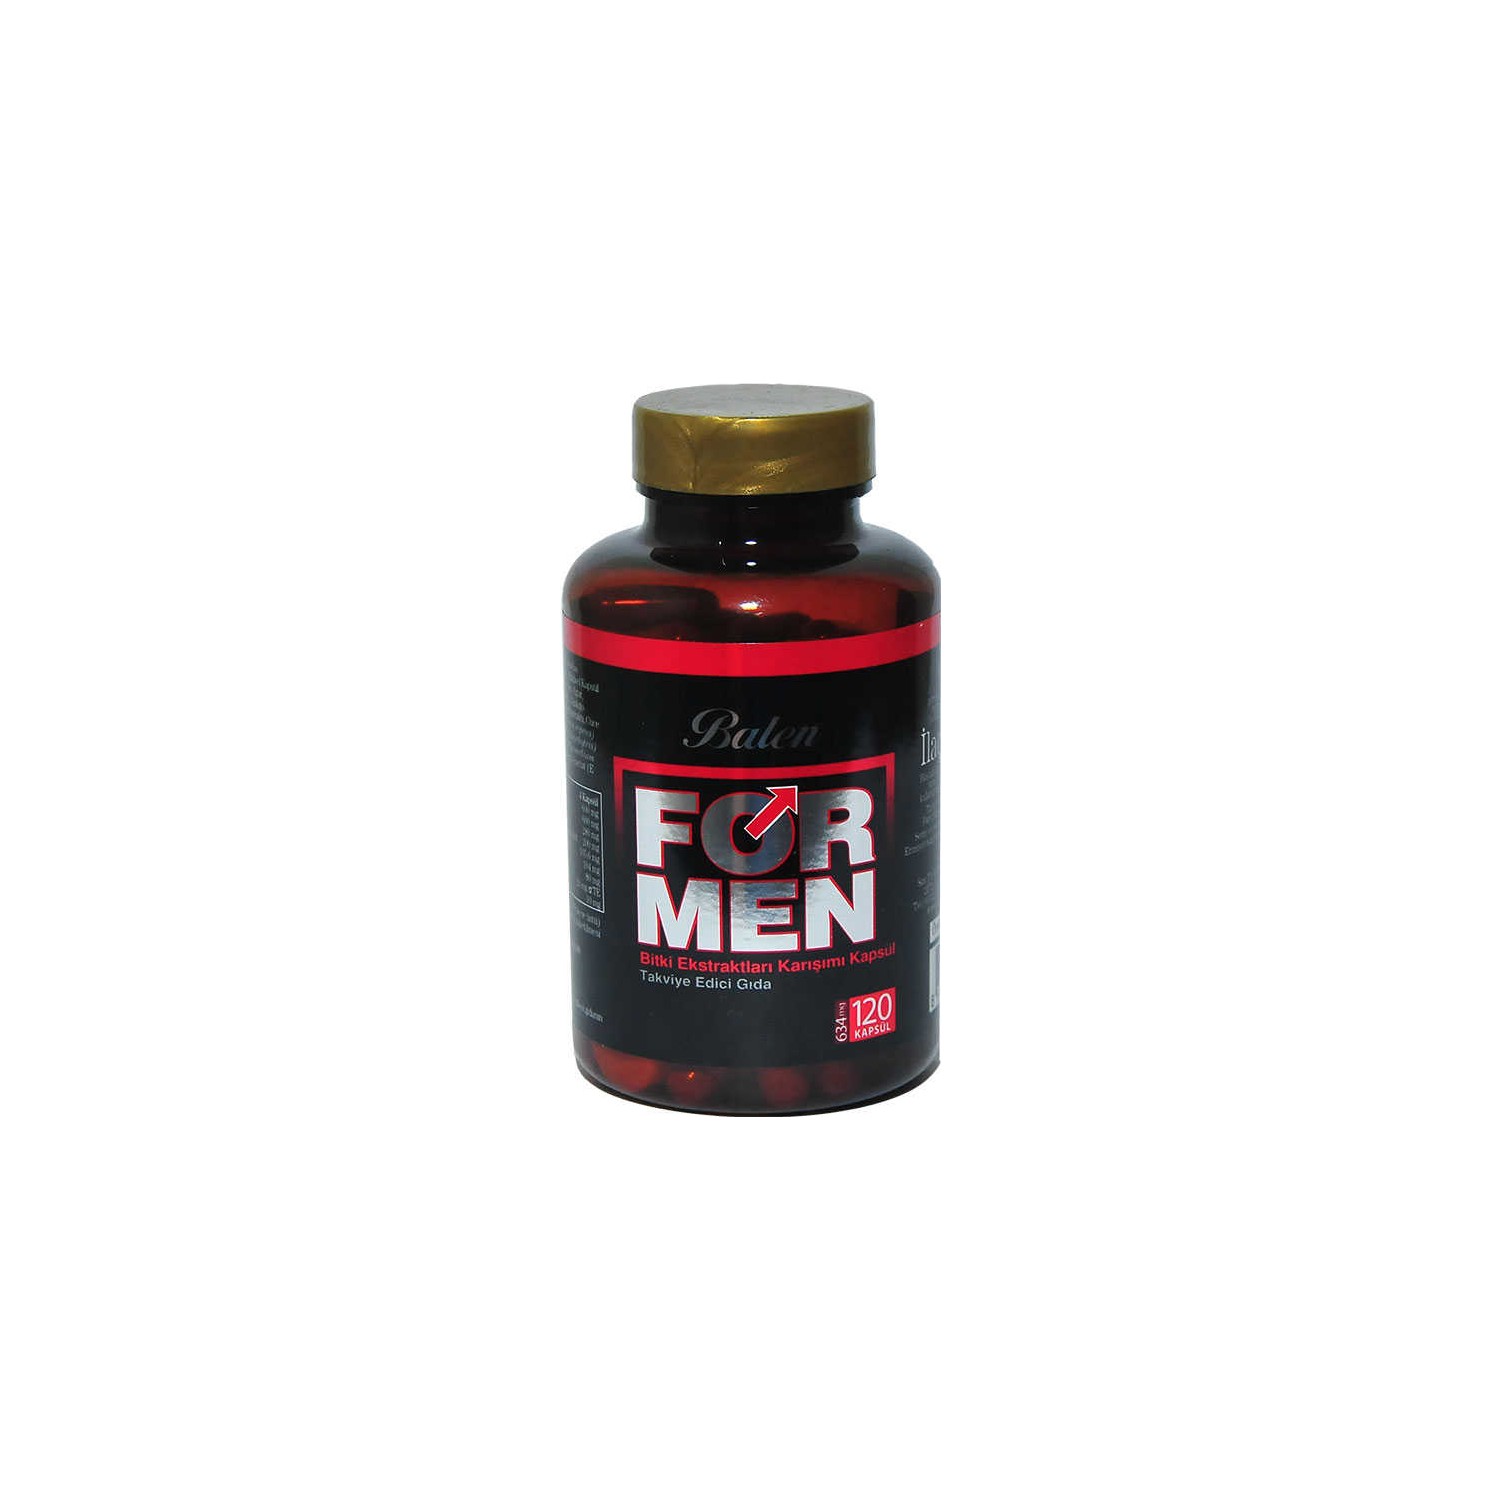 Активная добавка Balen For Men Herbal Mixture 120 капсул, 2 штуки cyytl men